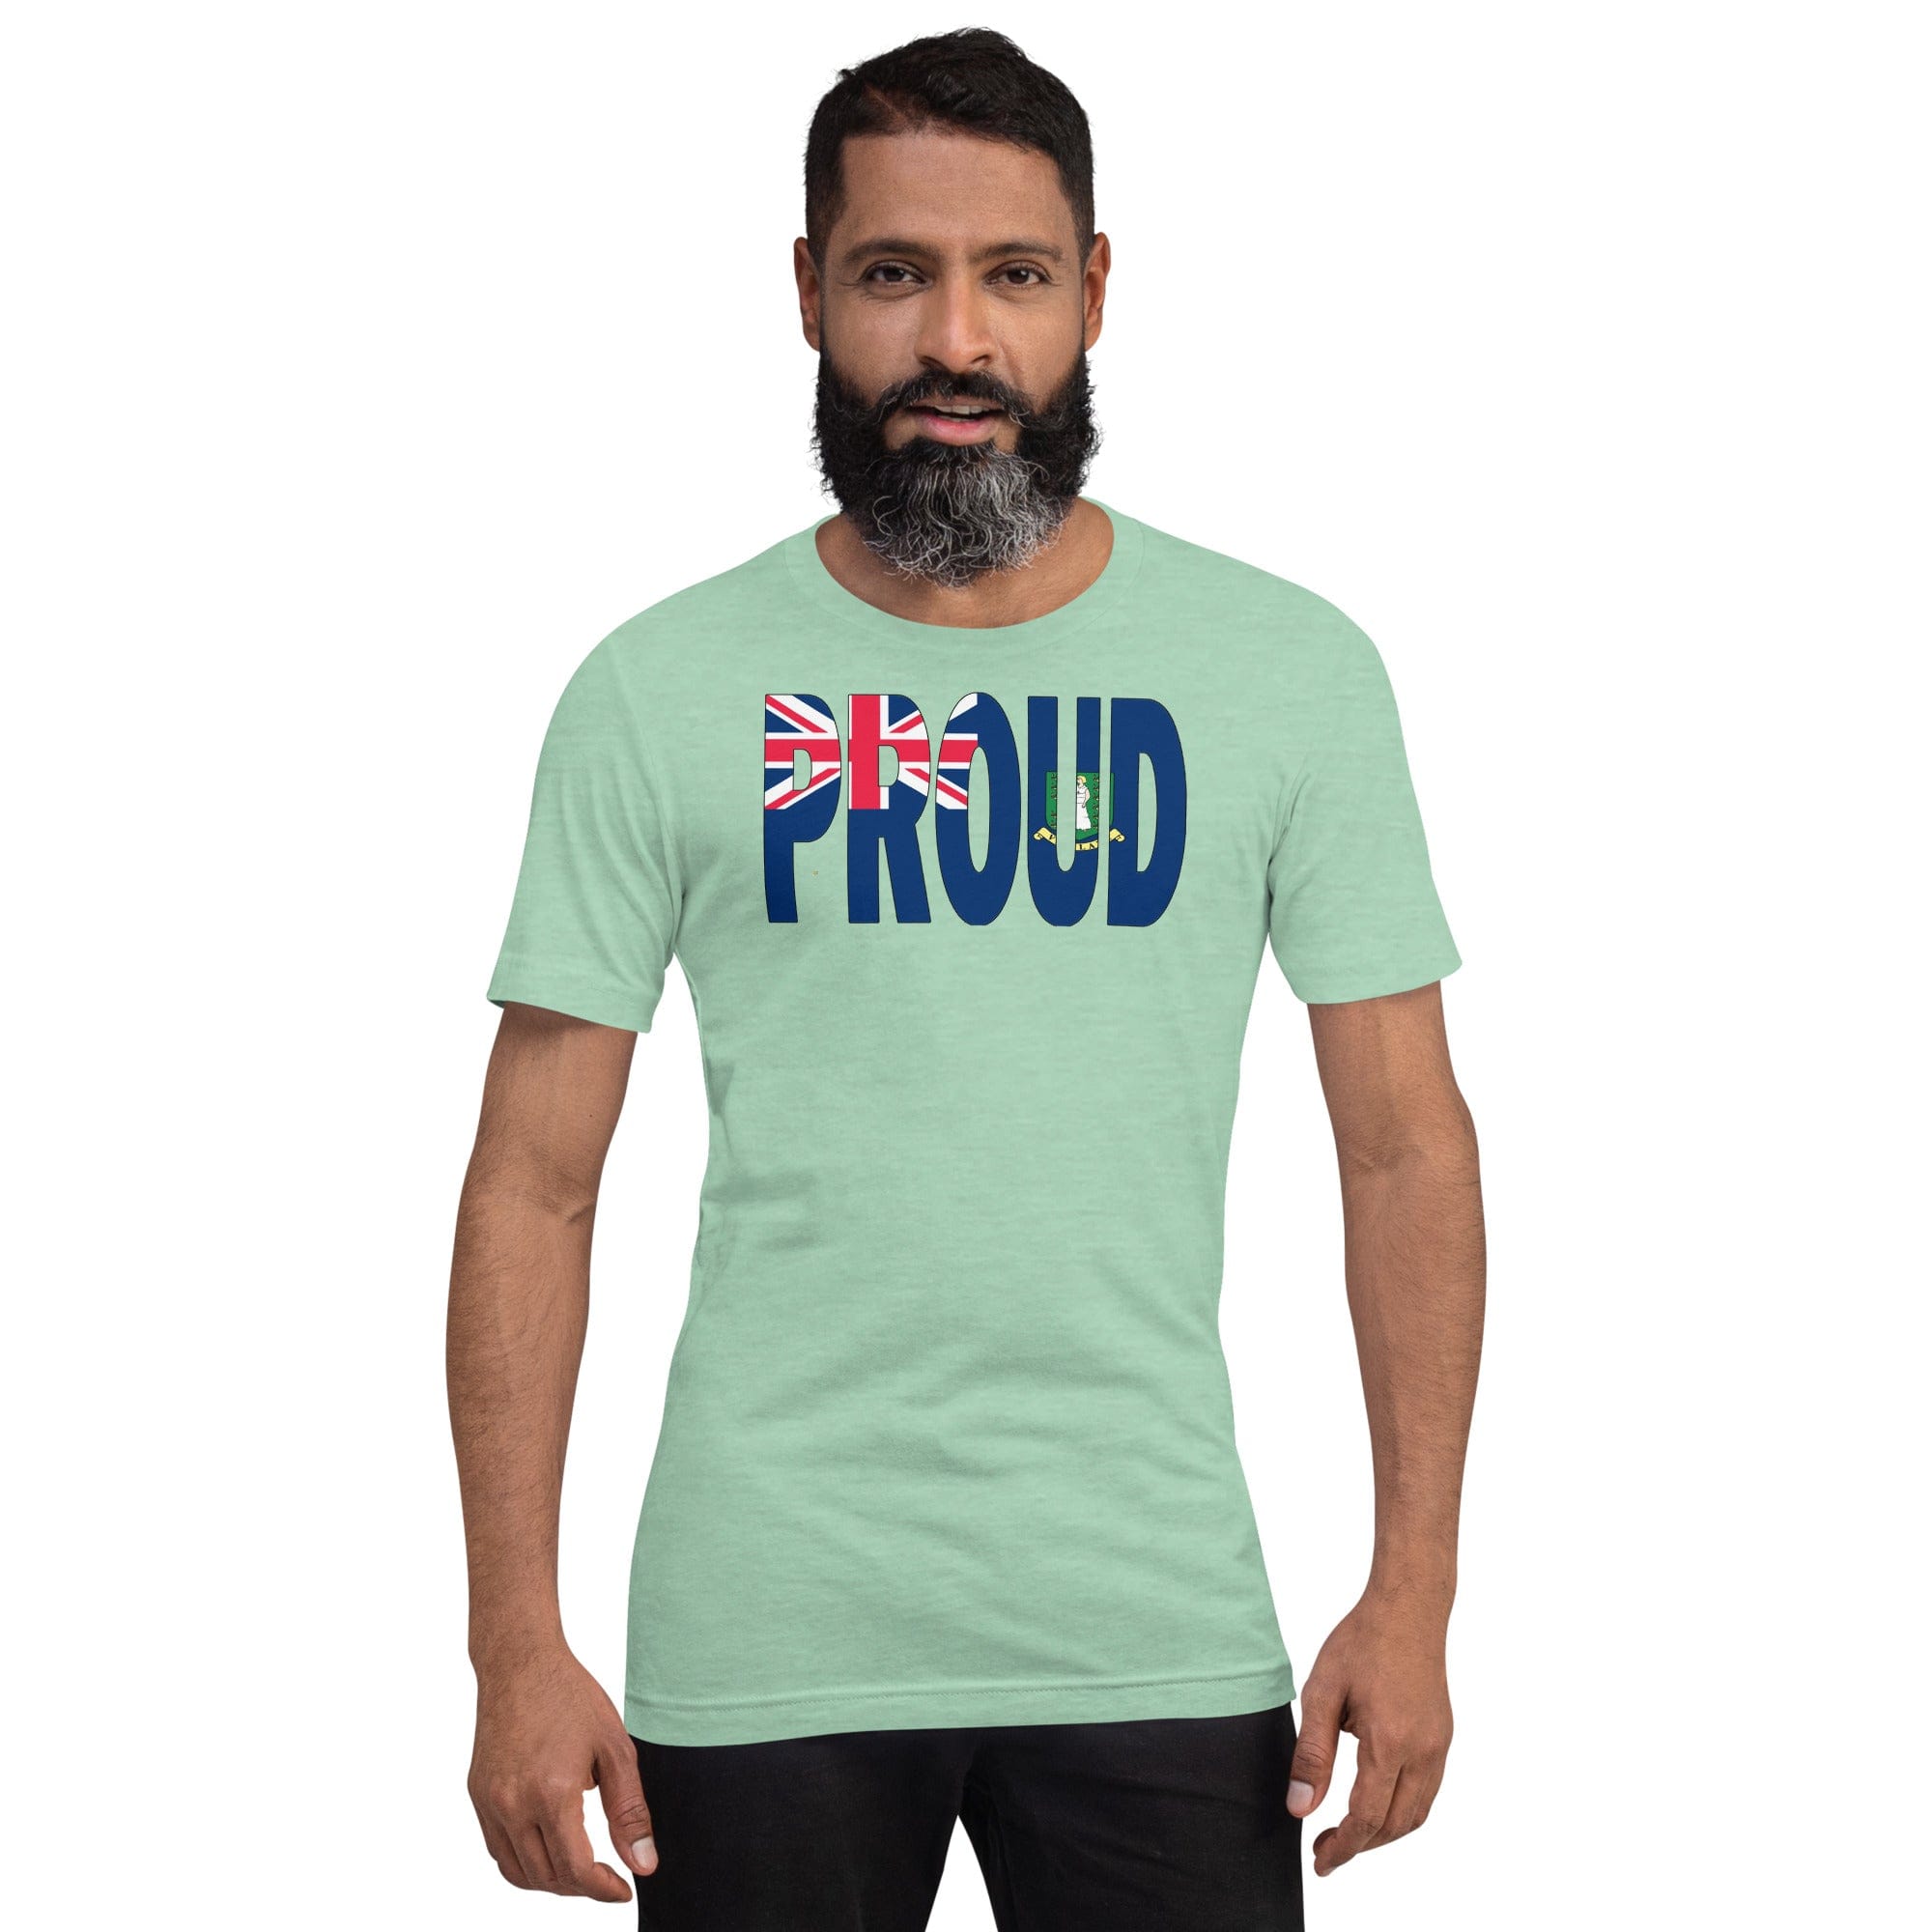 Proud British Virgin Islands Flag mint color t-shirt on a black man.